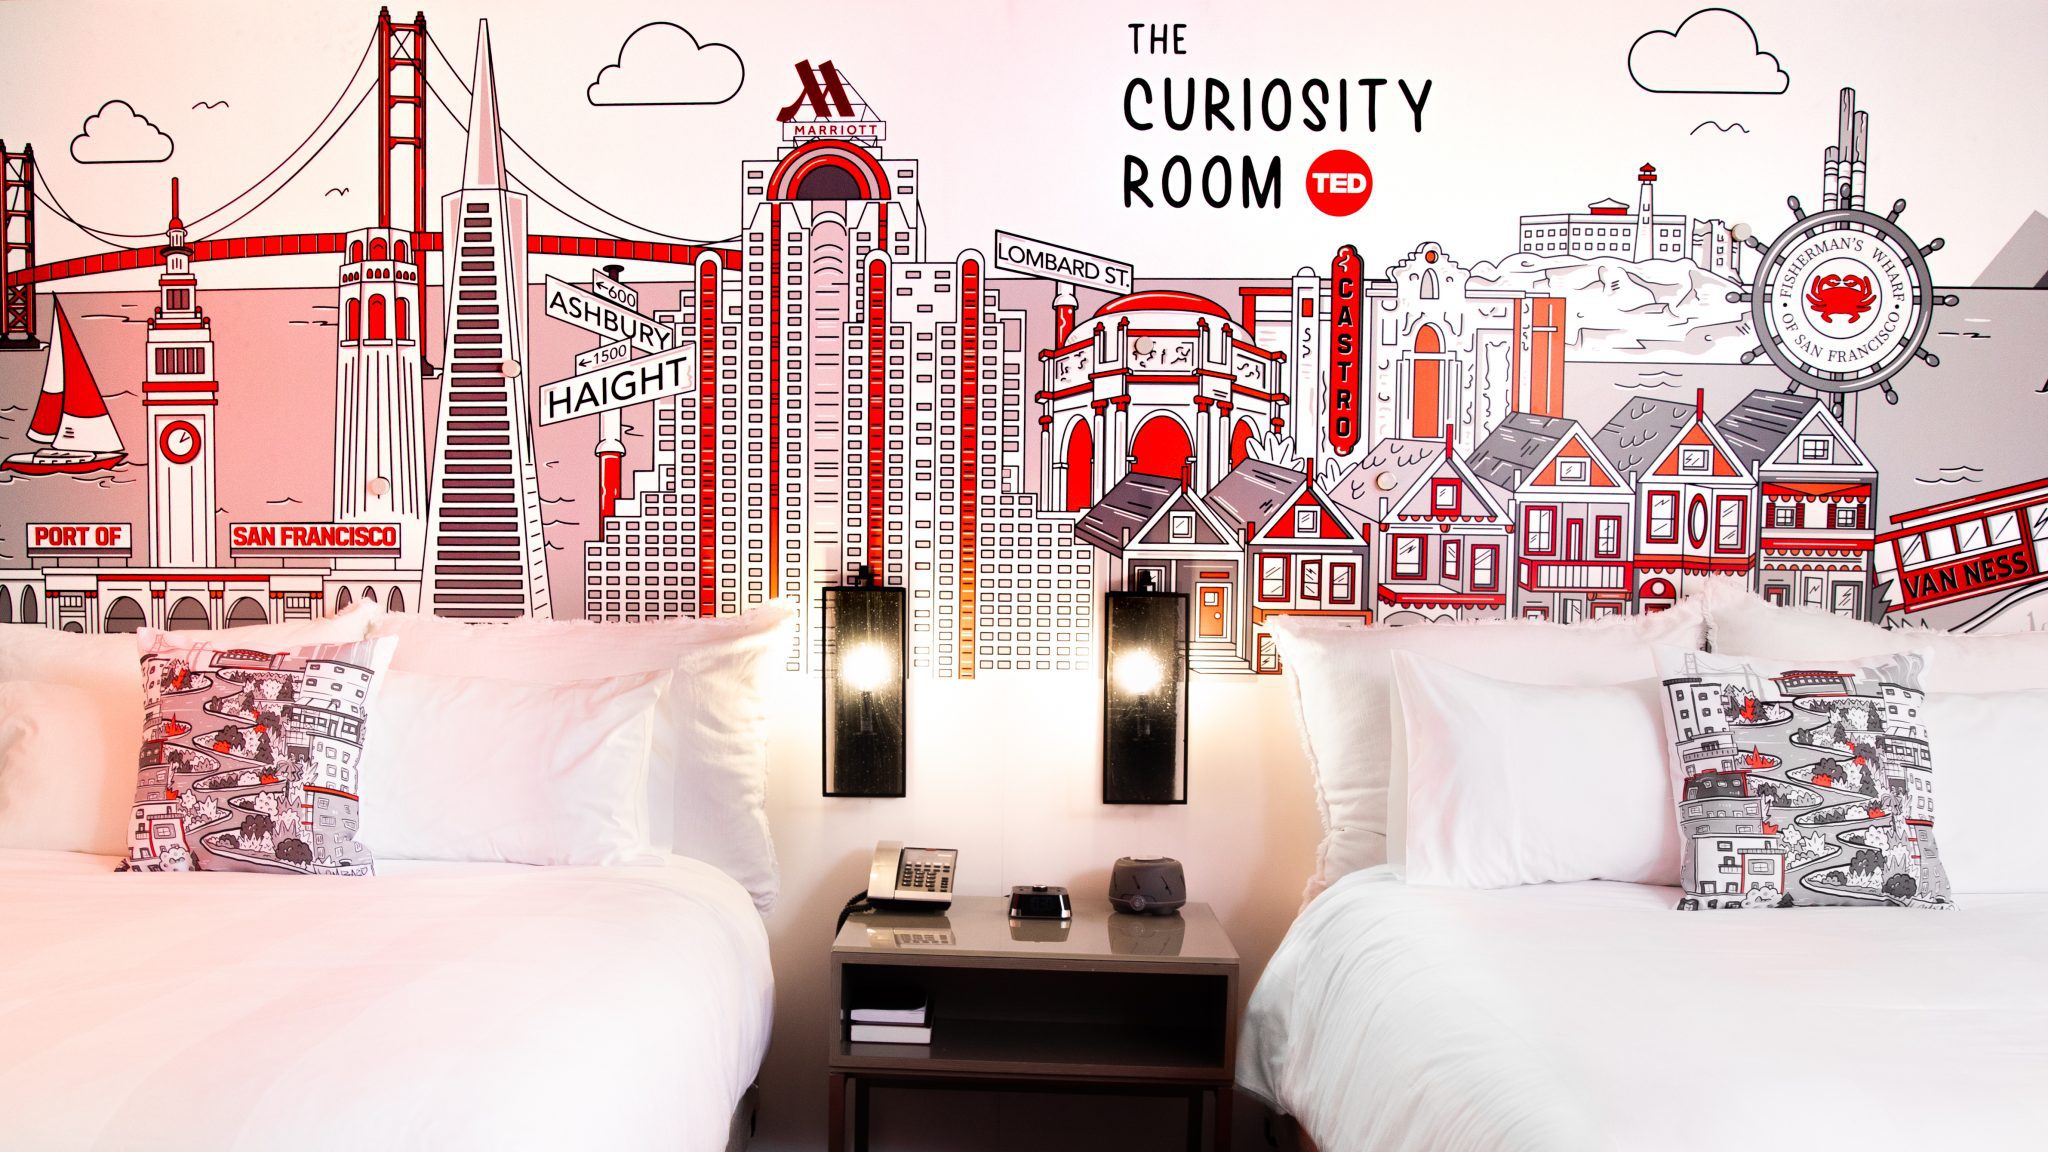 A Marriott Curiosity Room in San Francisco